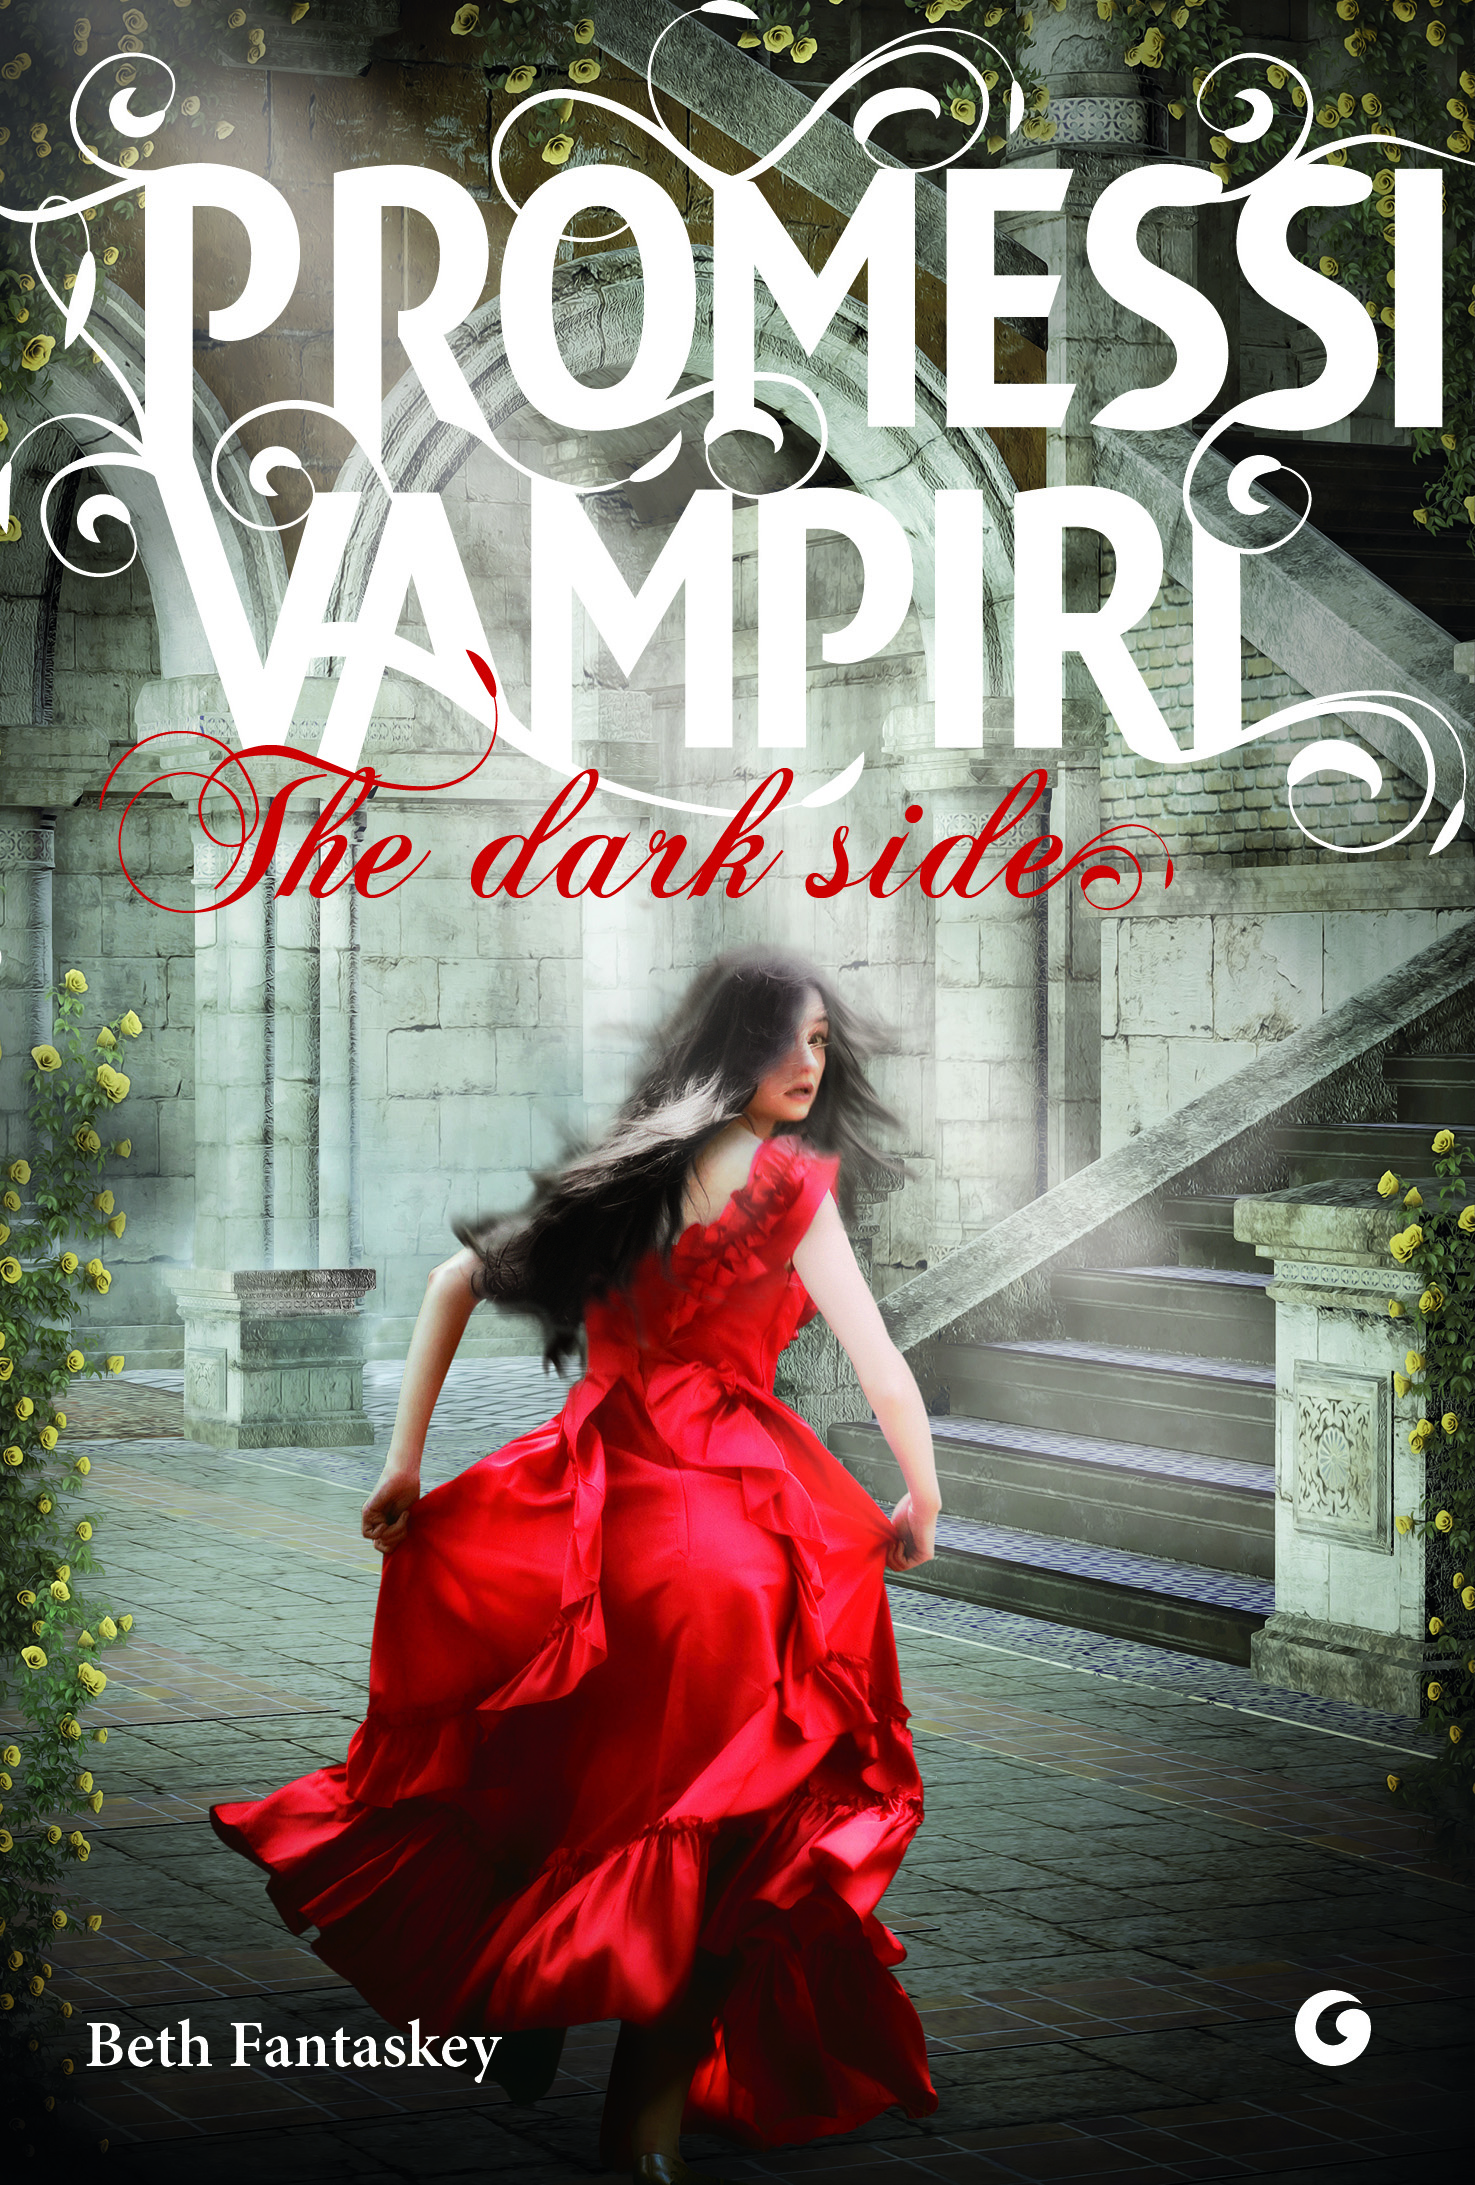 Promessi vampiri - The dark side